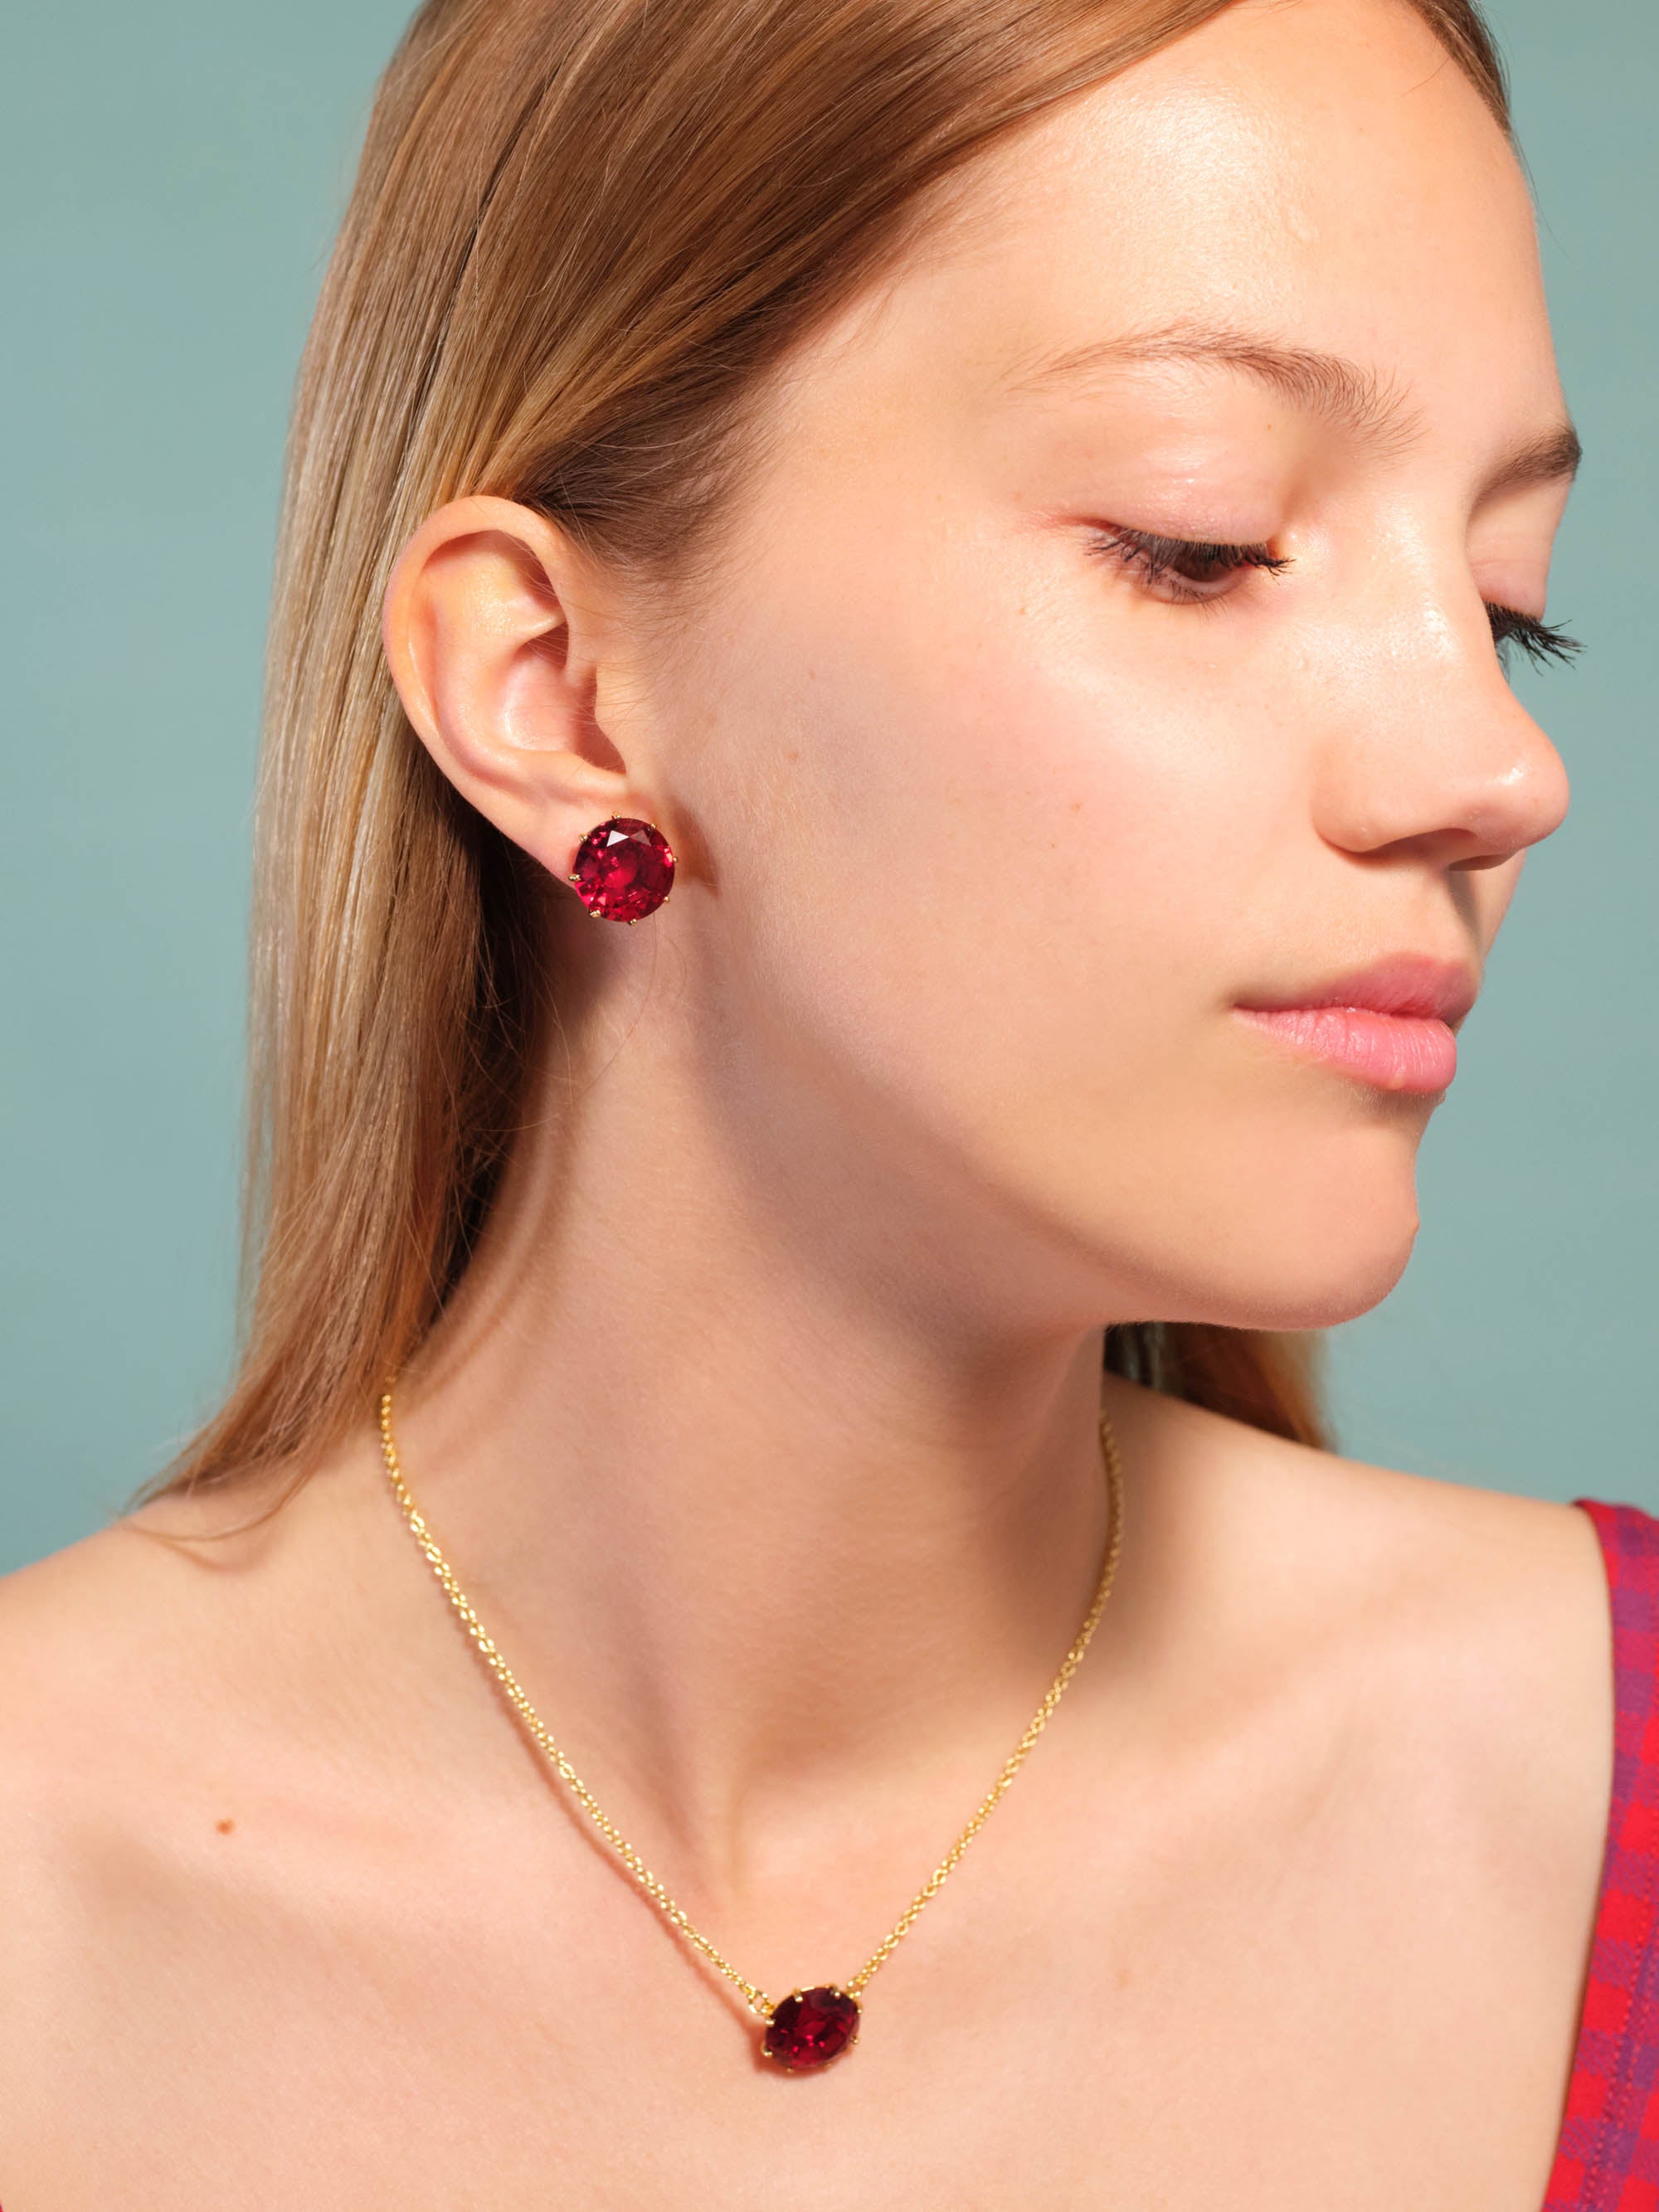 Garnet red diamantine round stone post earrings